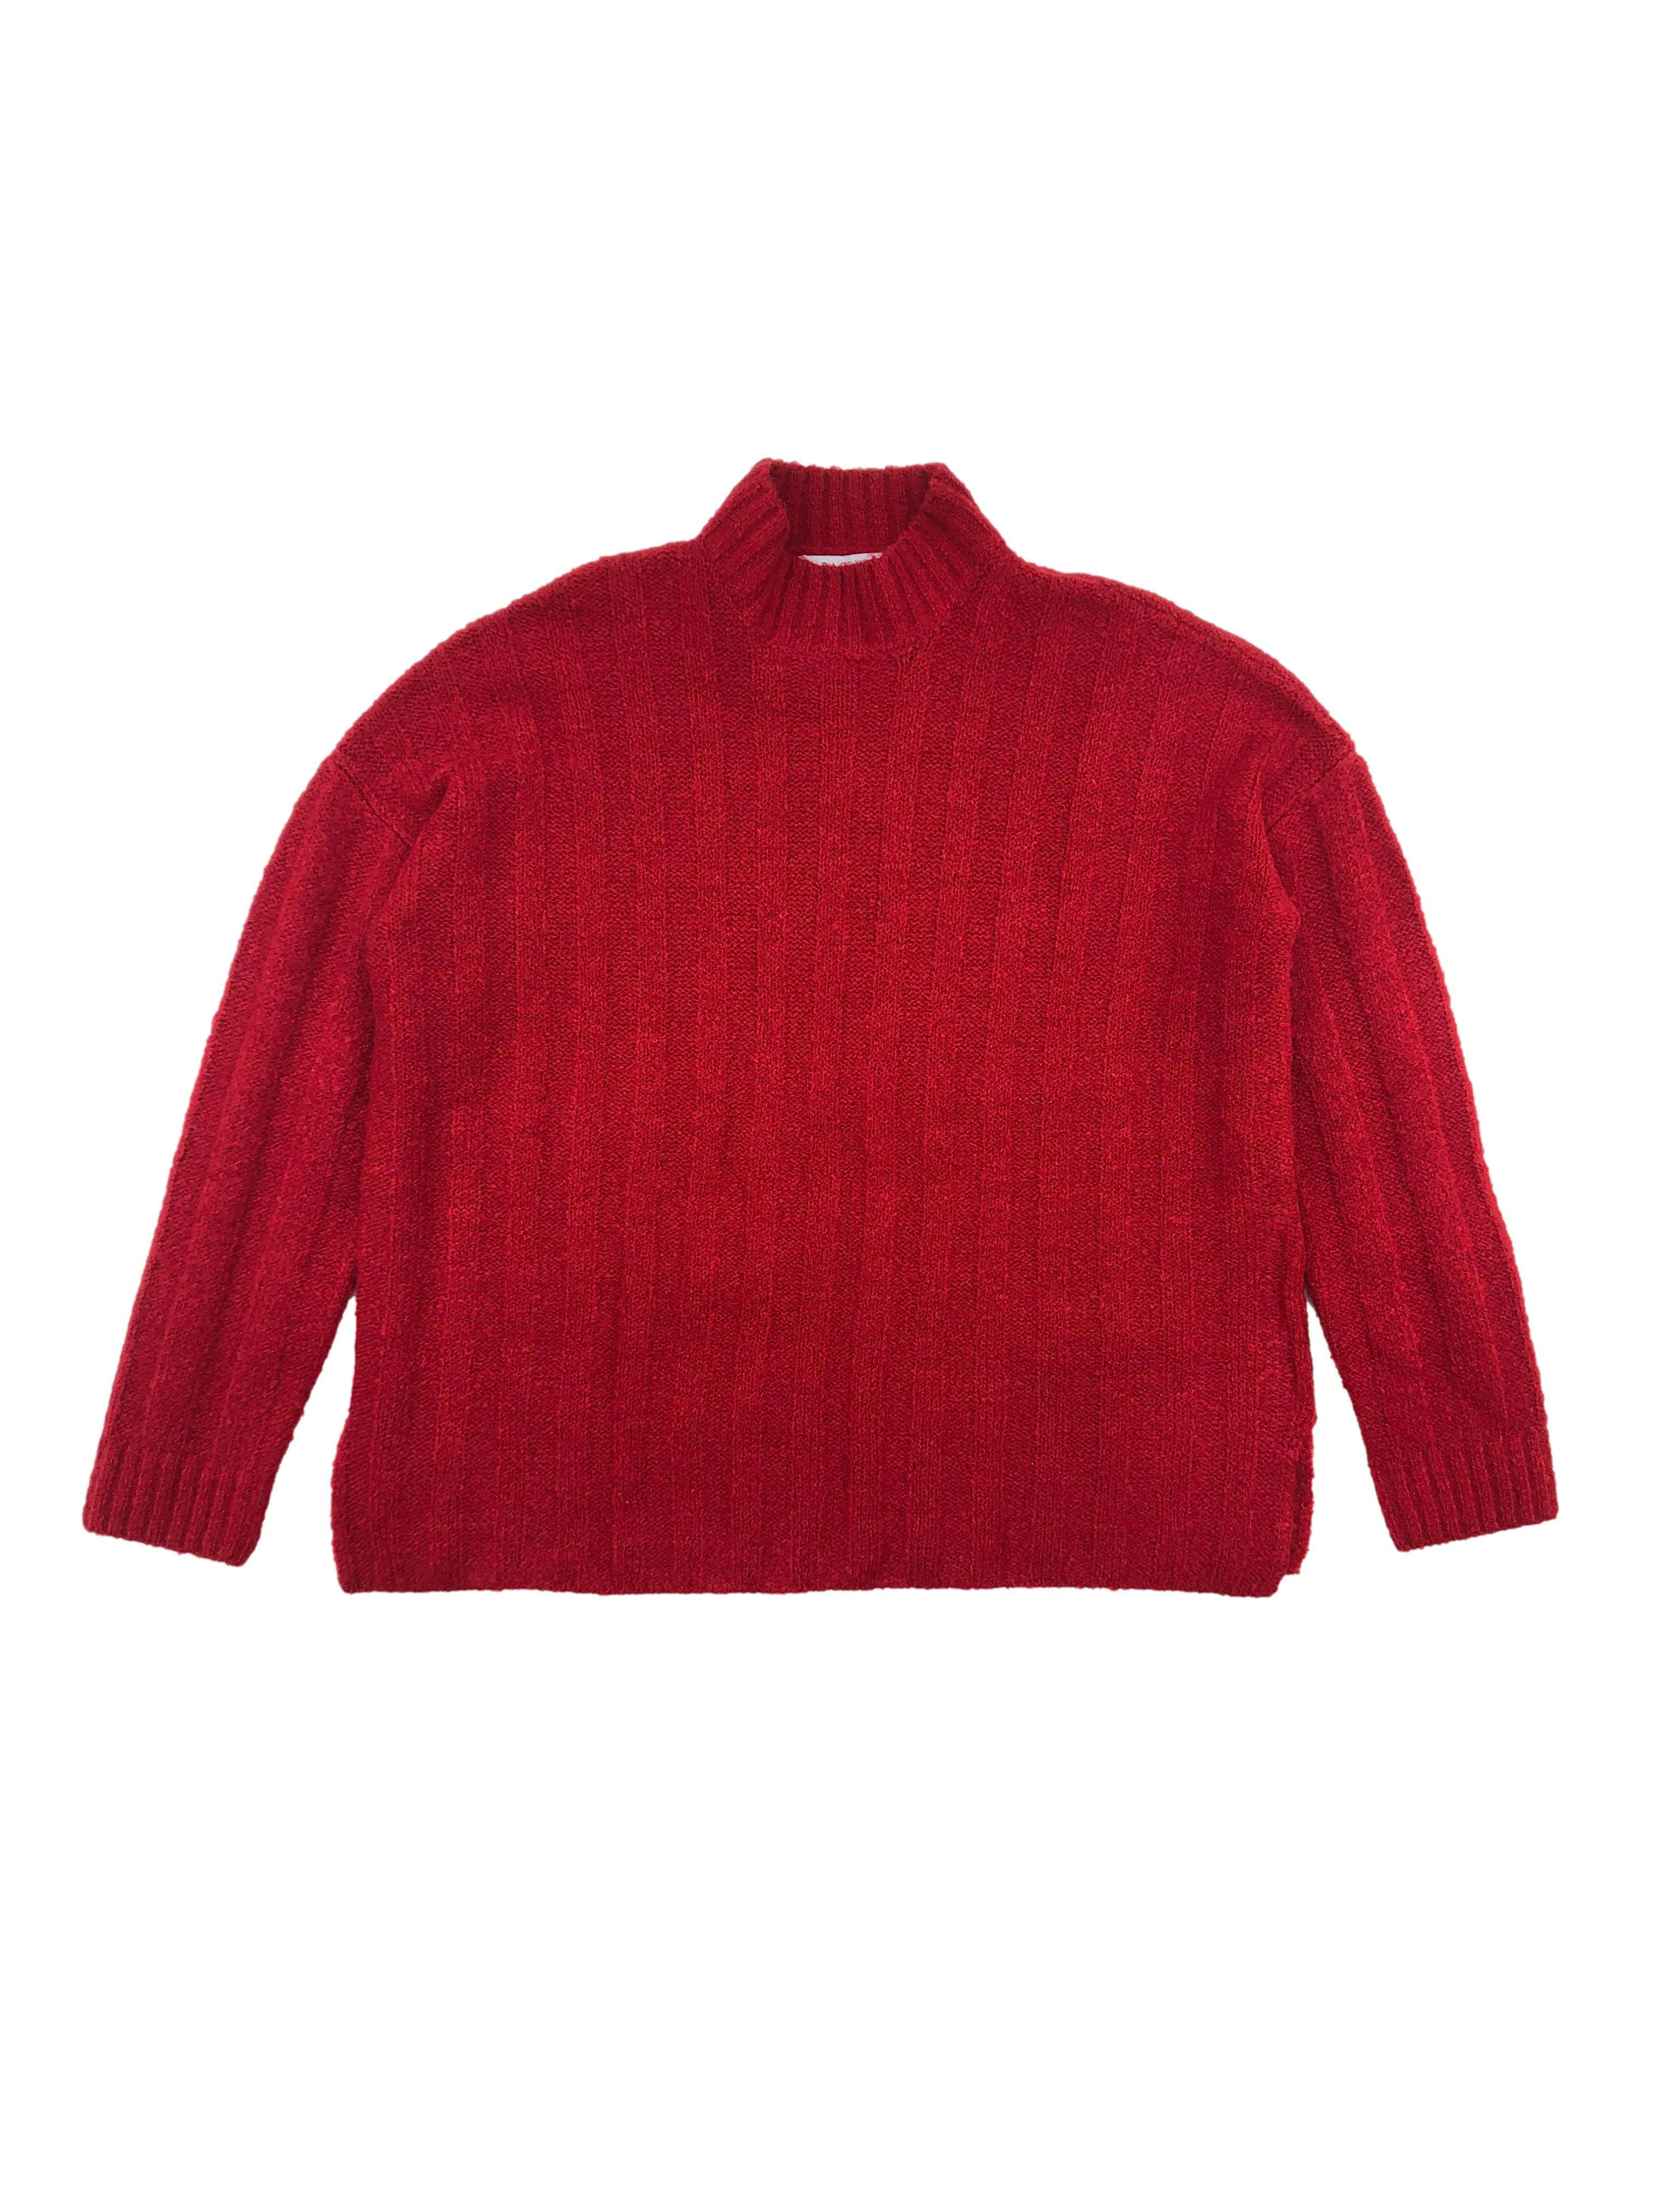 Chompa oversize Basement roja lana blend con aberturas laterales. Nueva con etiqueta. Busto 110cm, Largo 55cm.